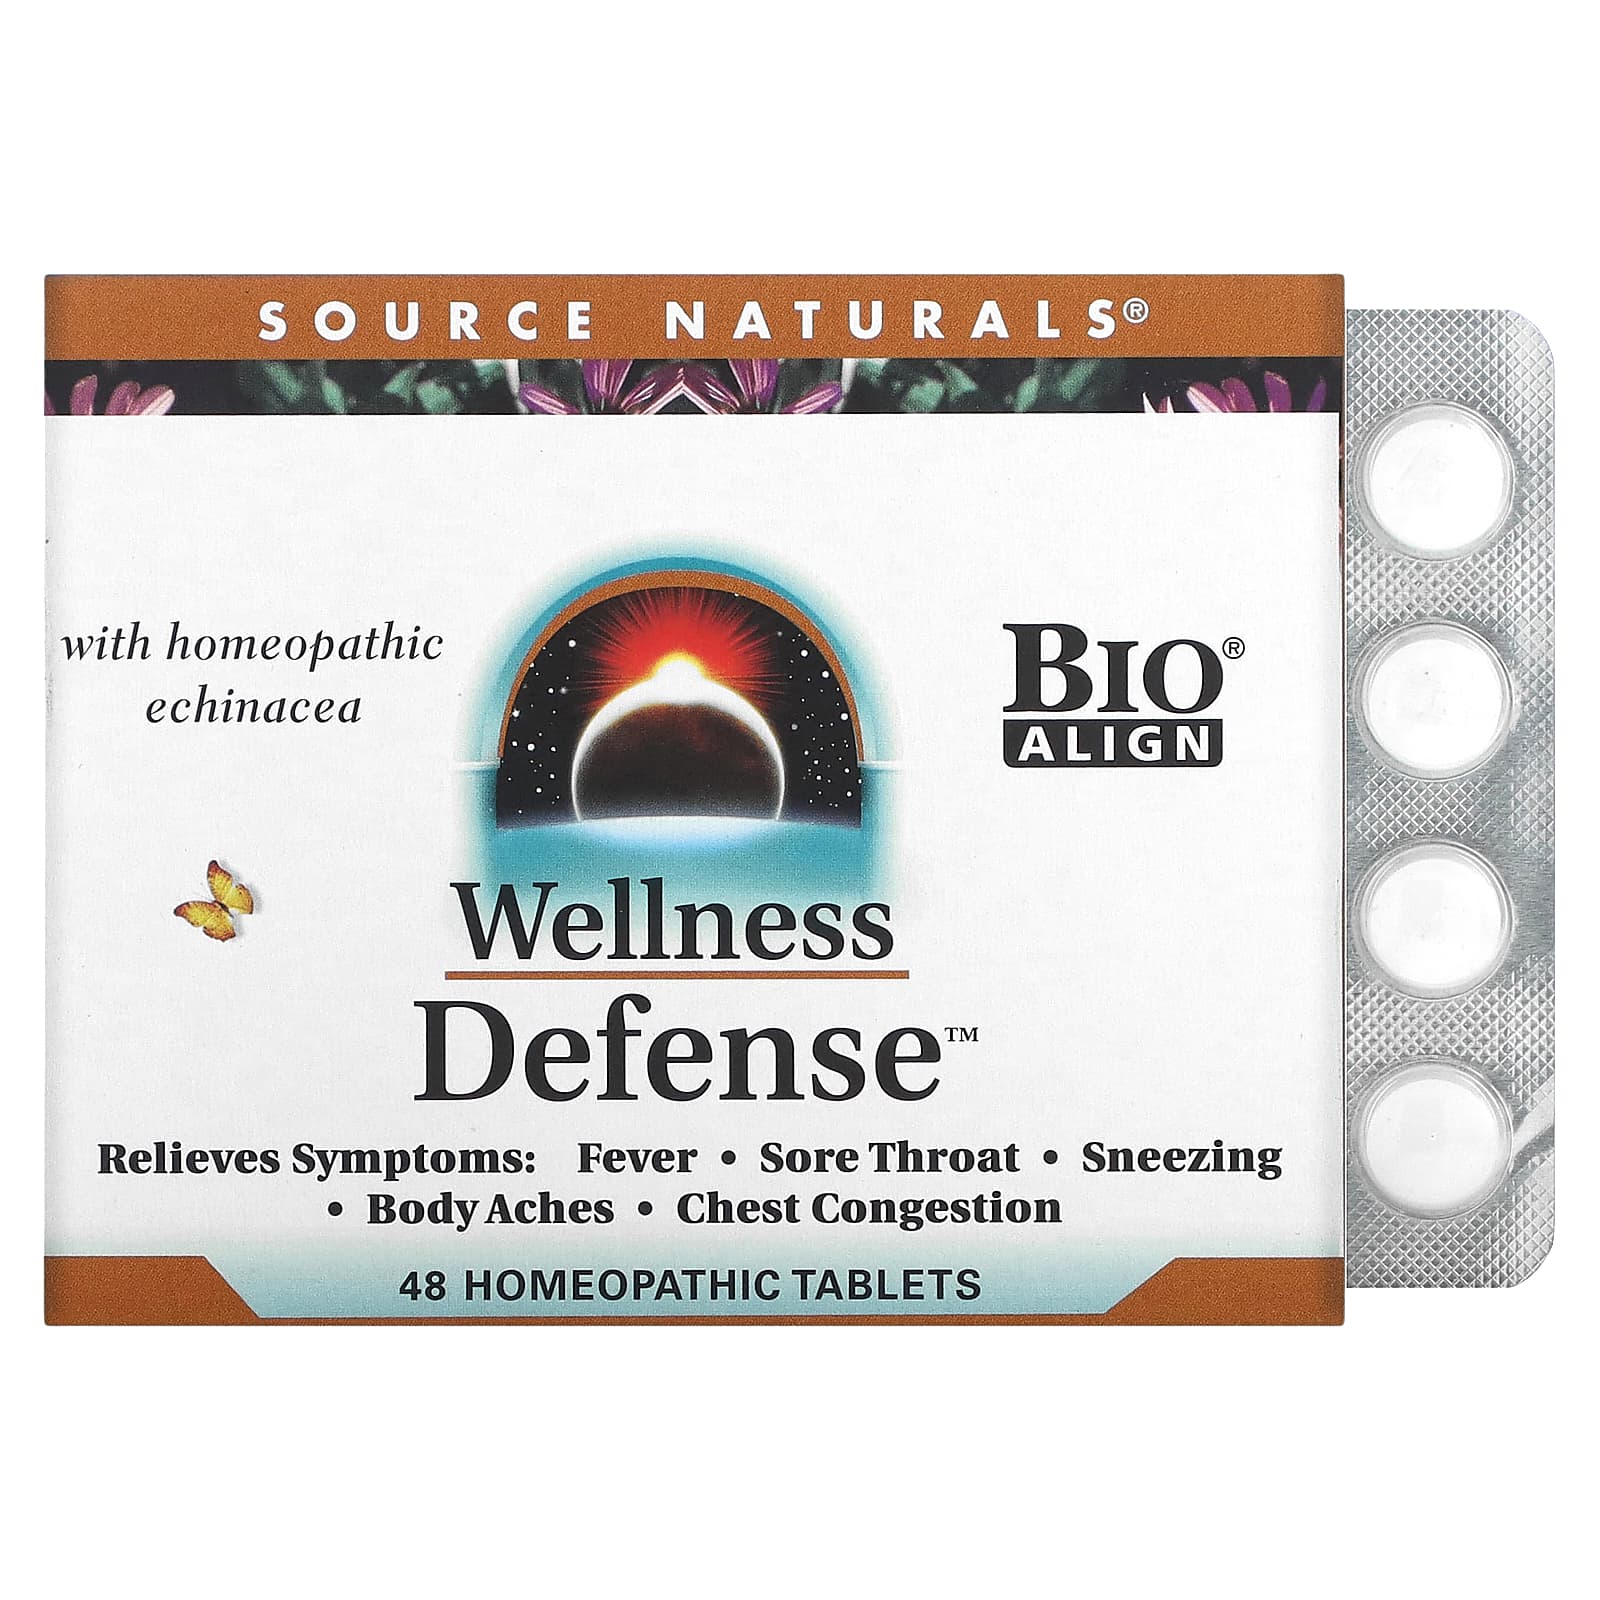 Source Naturals Wellness Defense 48 Homeopathic Tablets source naturals wellness боль в ухе 48 гомеопатических таблеток